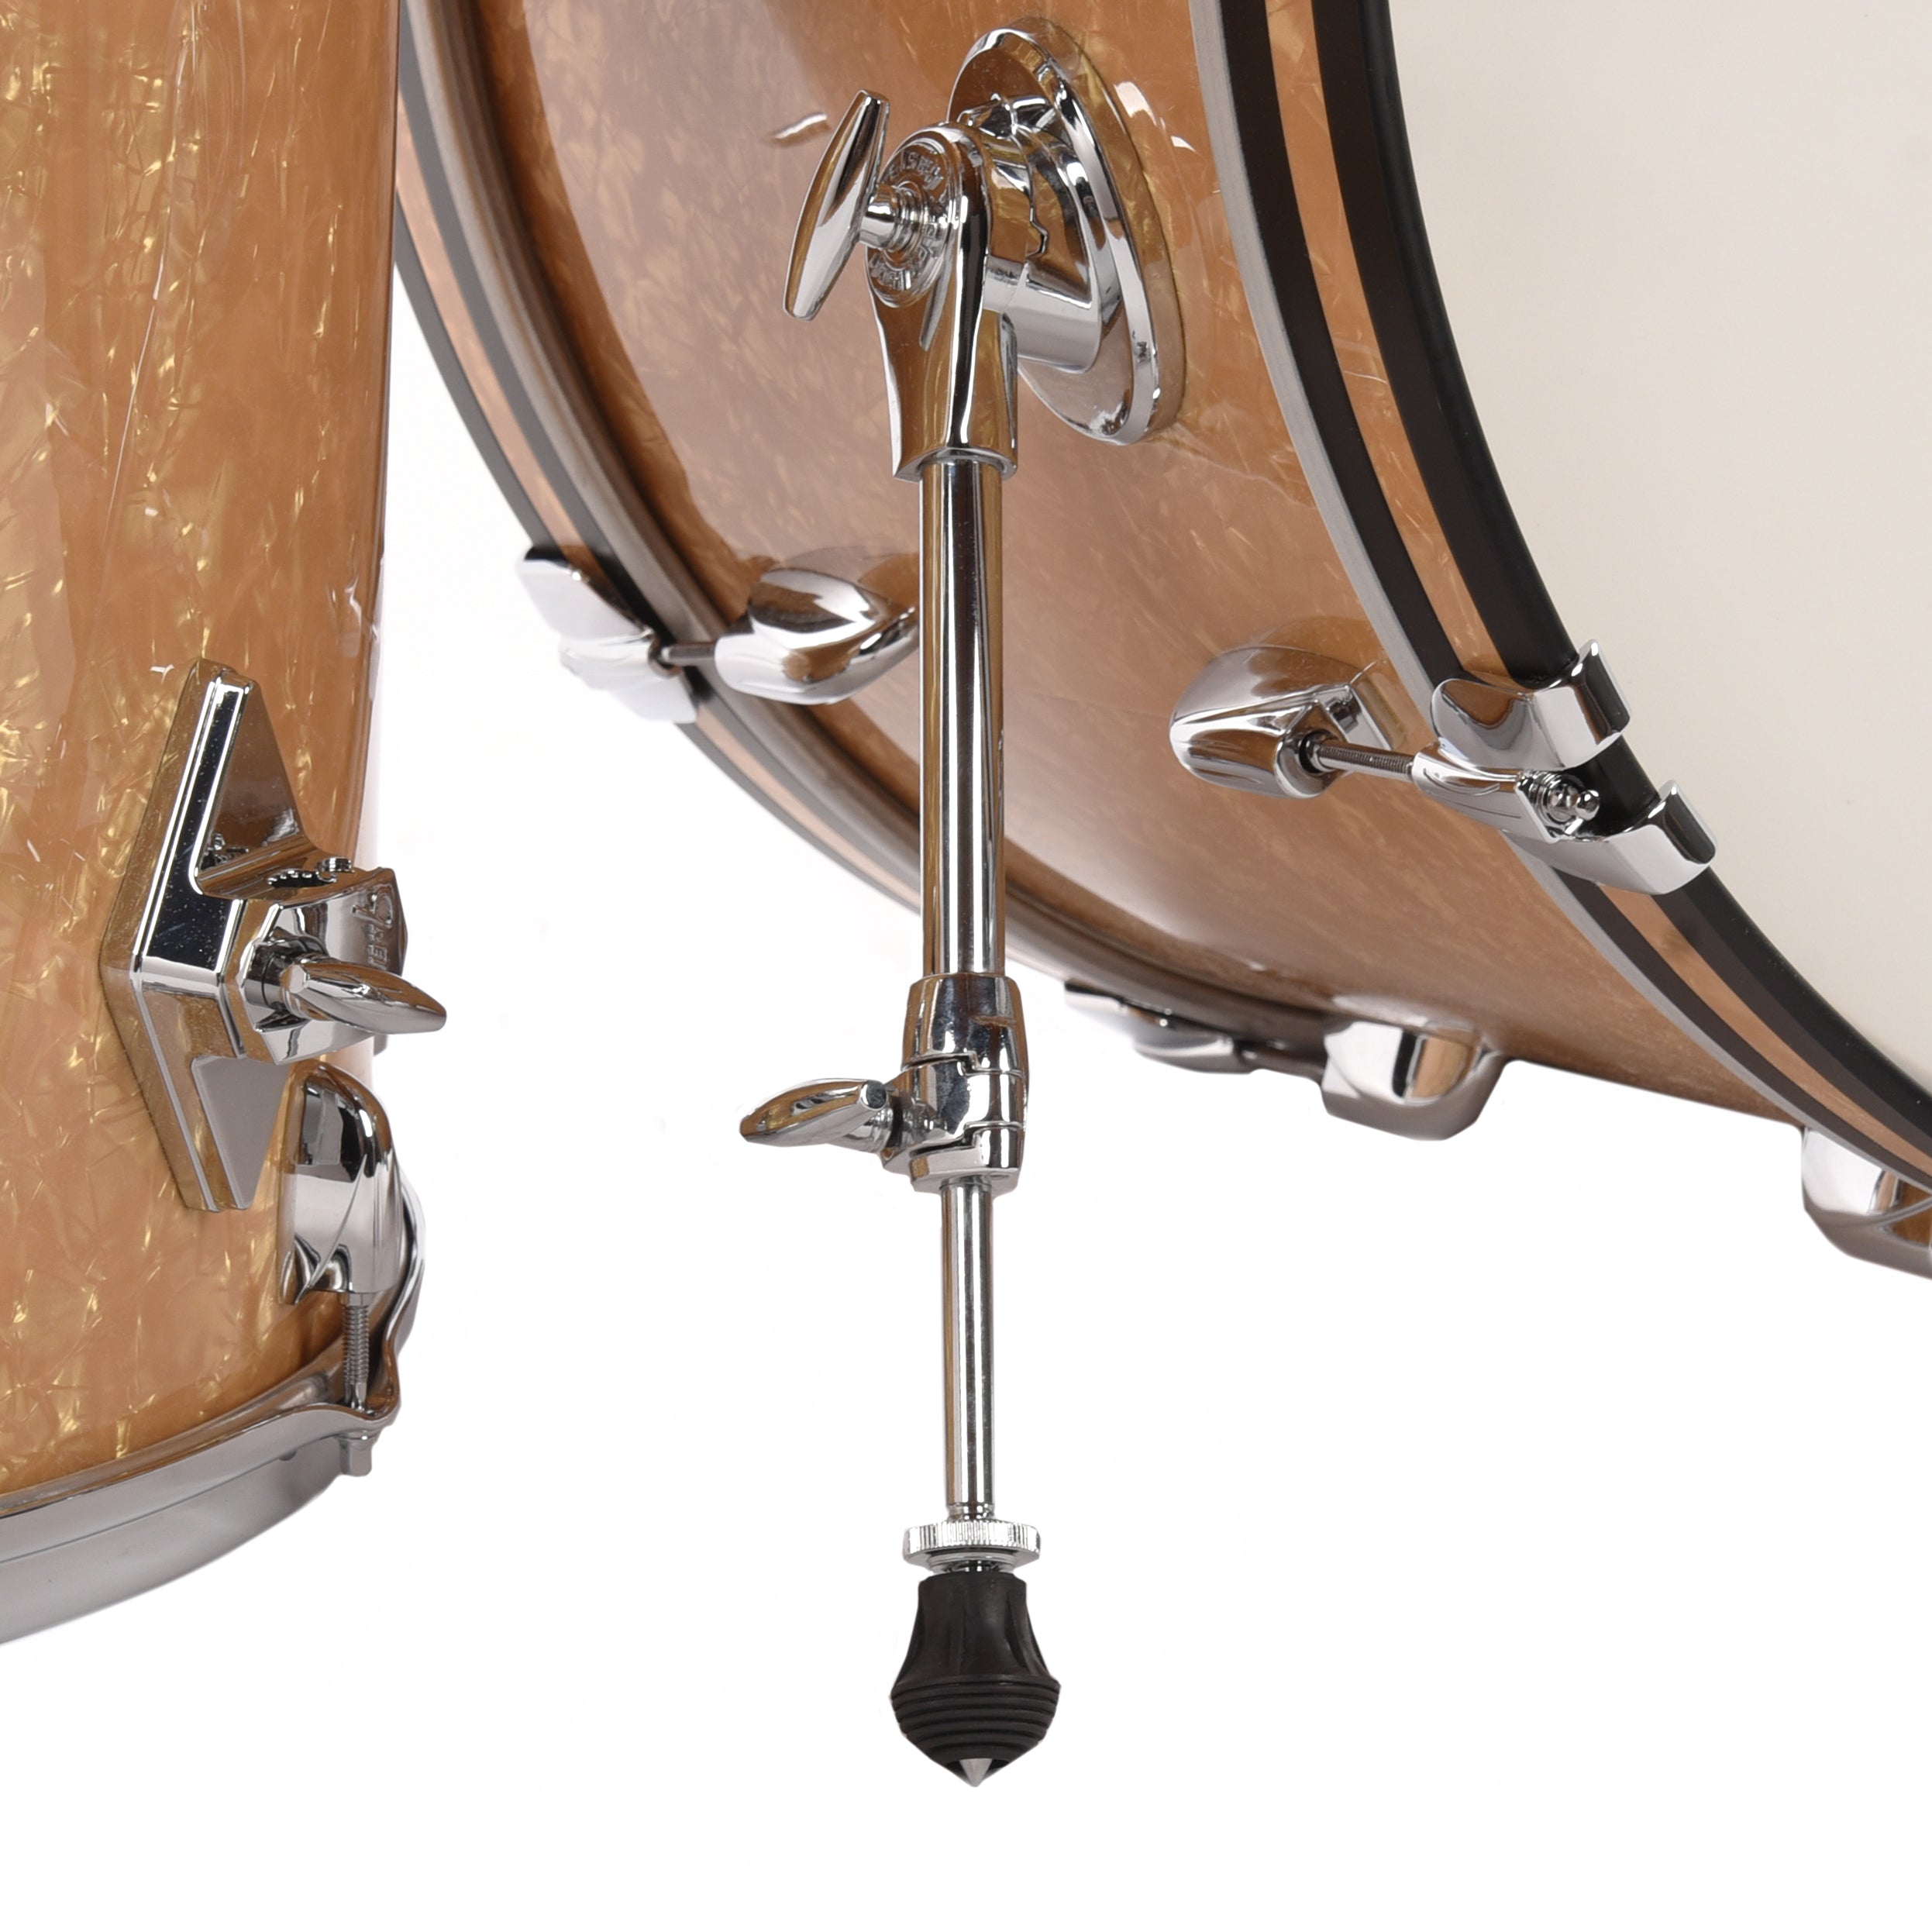 Gretsch Broadkaster 13/16/24 3pc. Drum Kit Antique Pearl